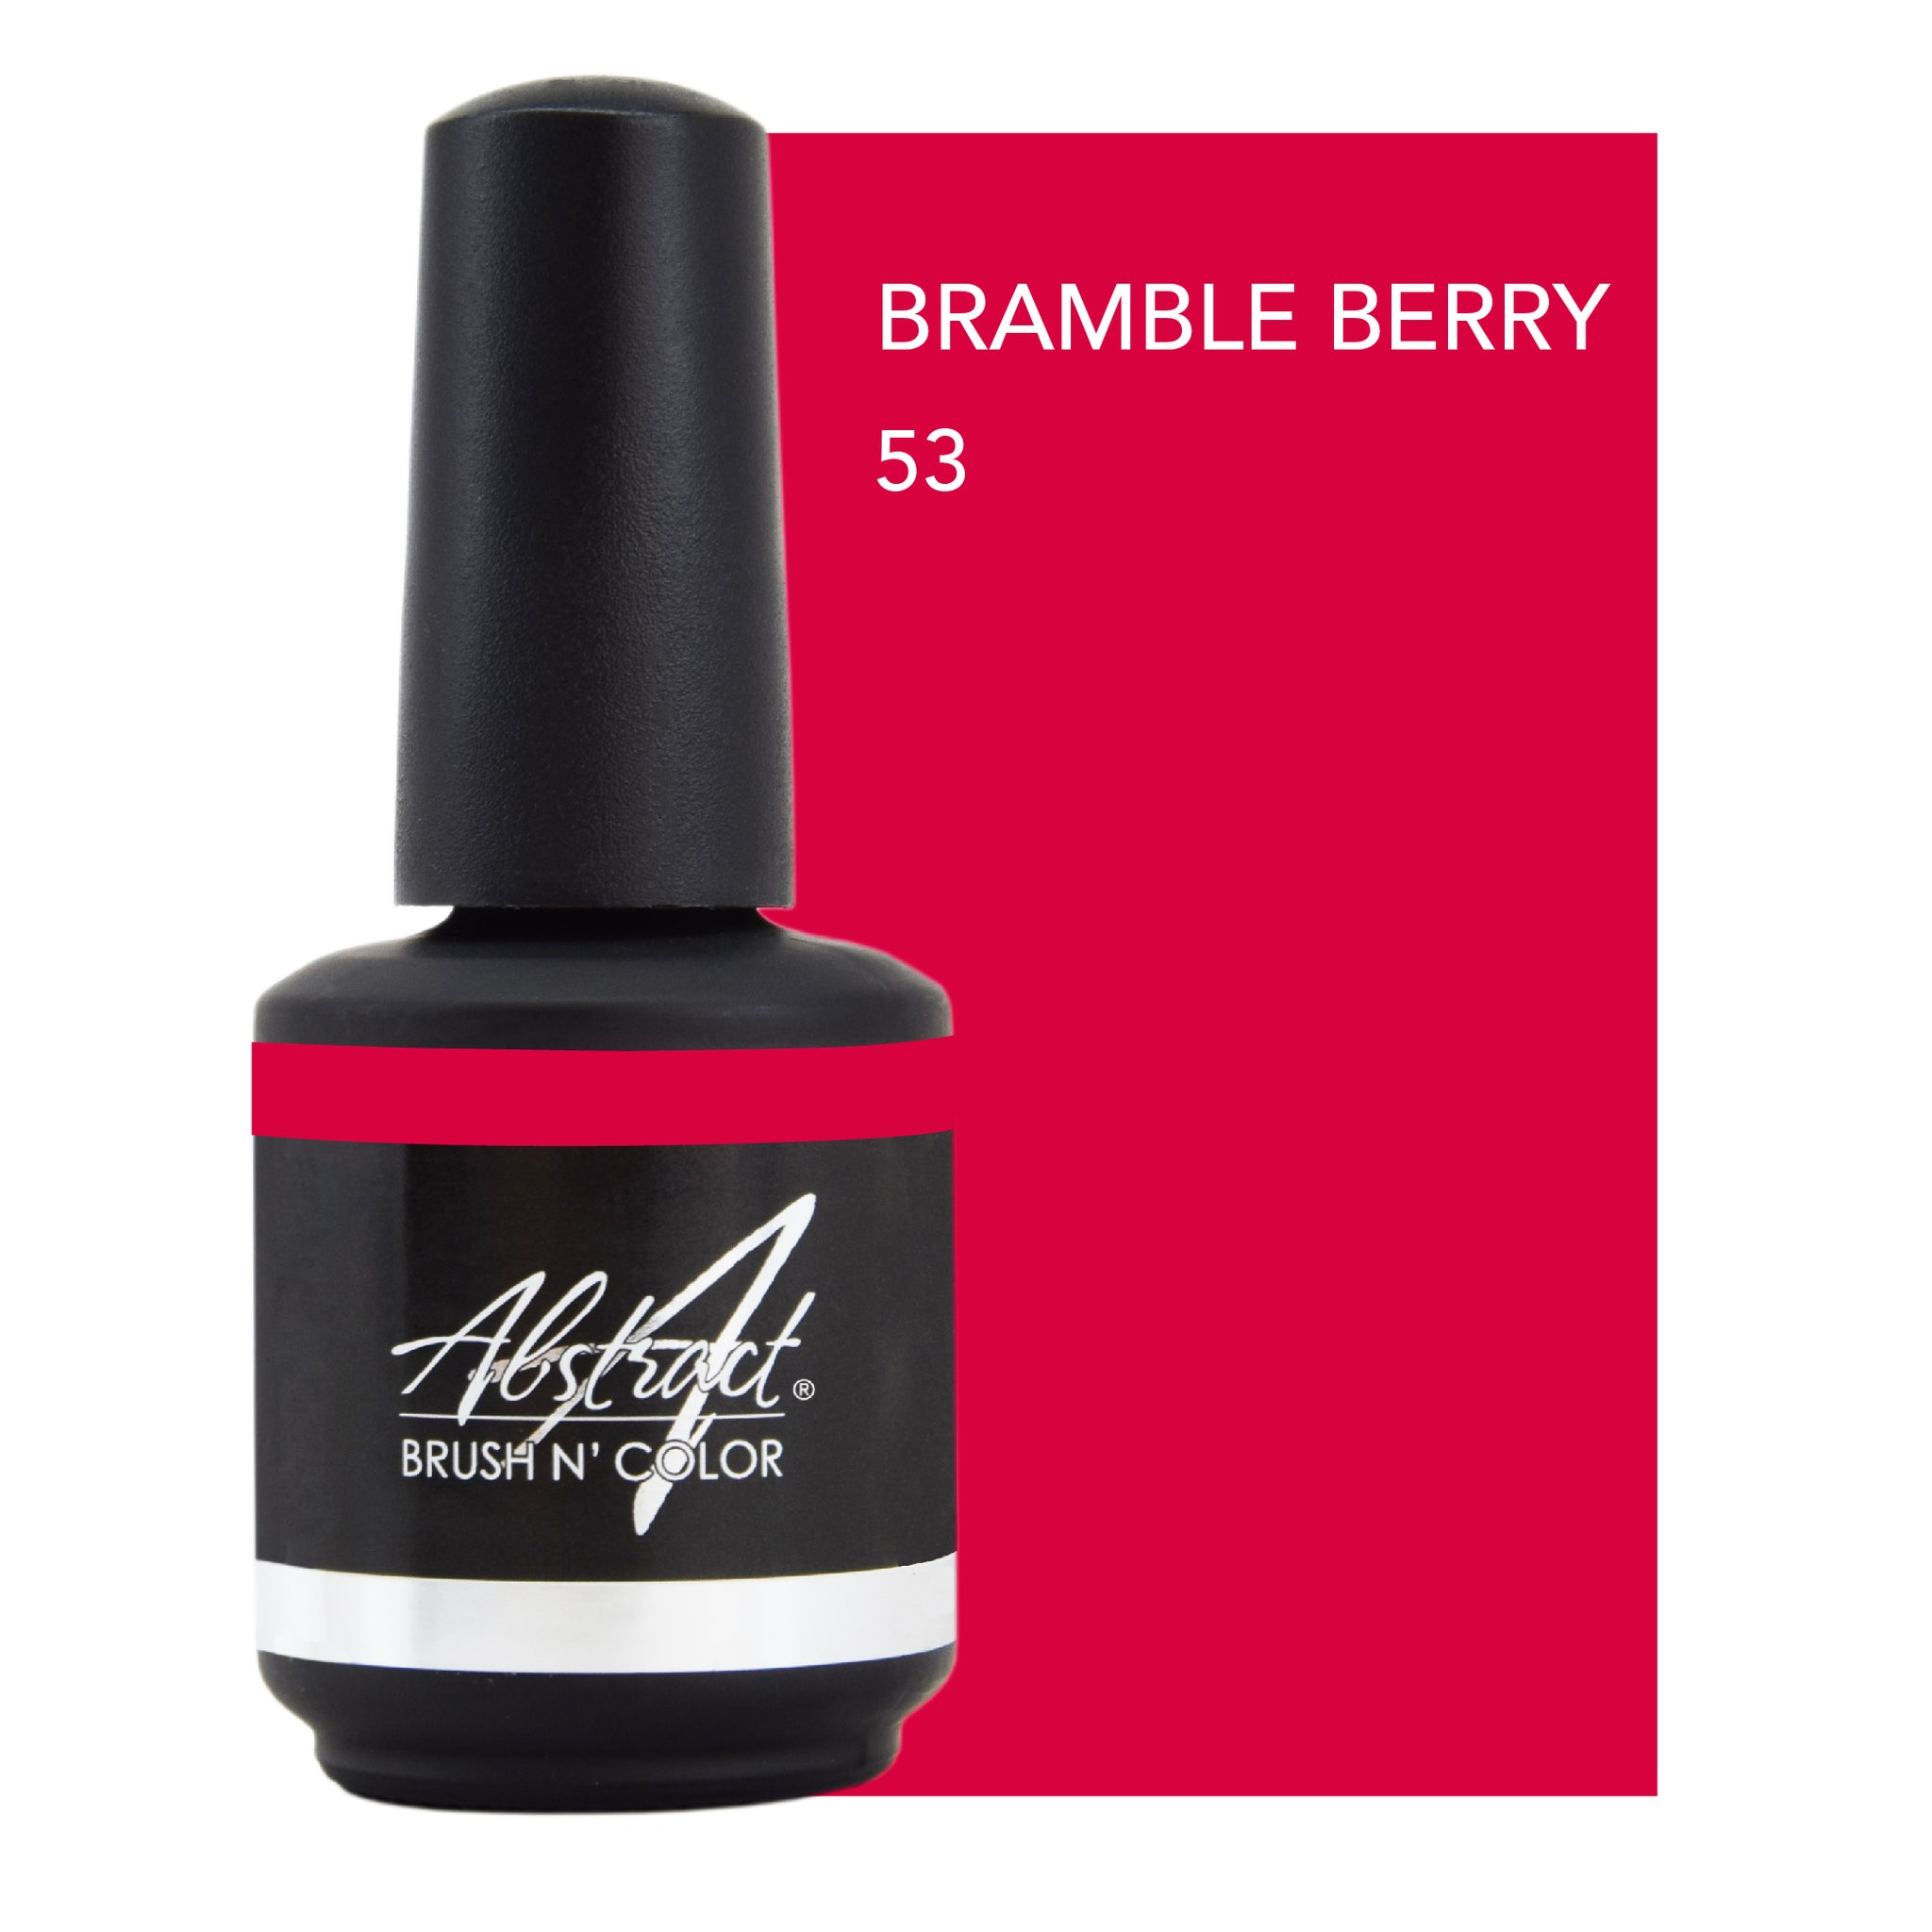 Bramble berry